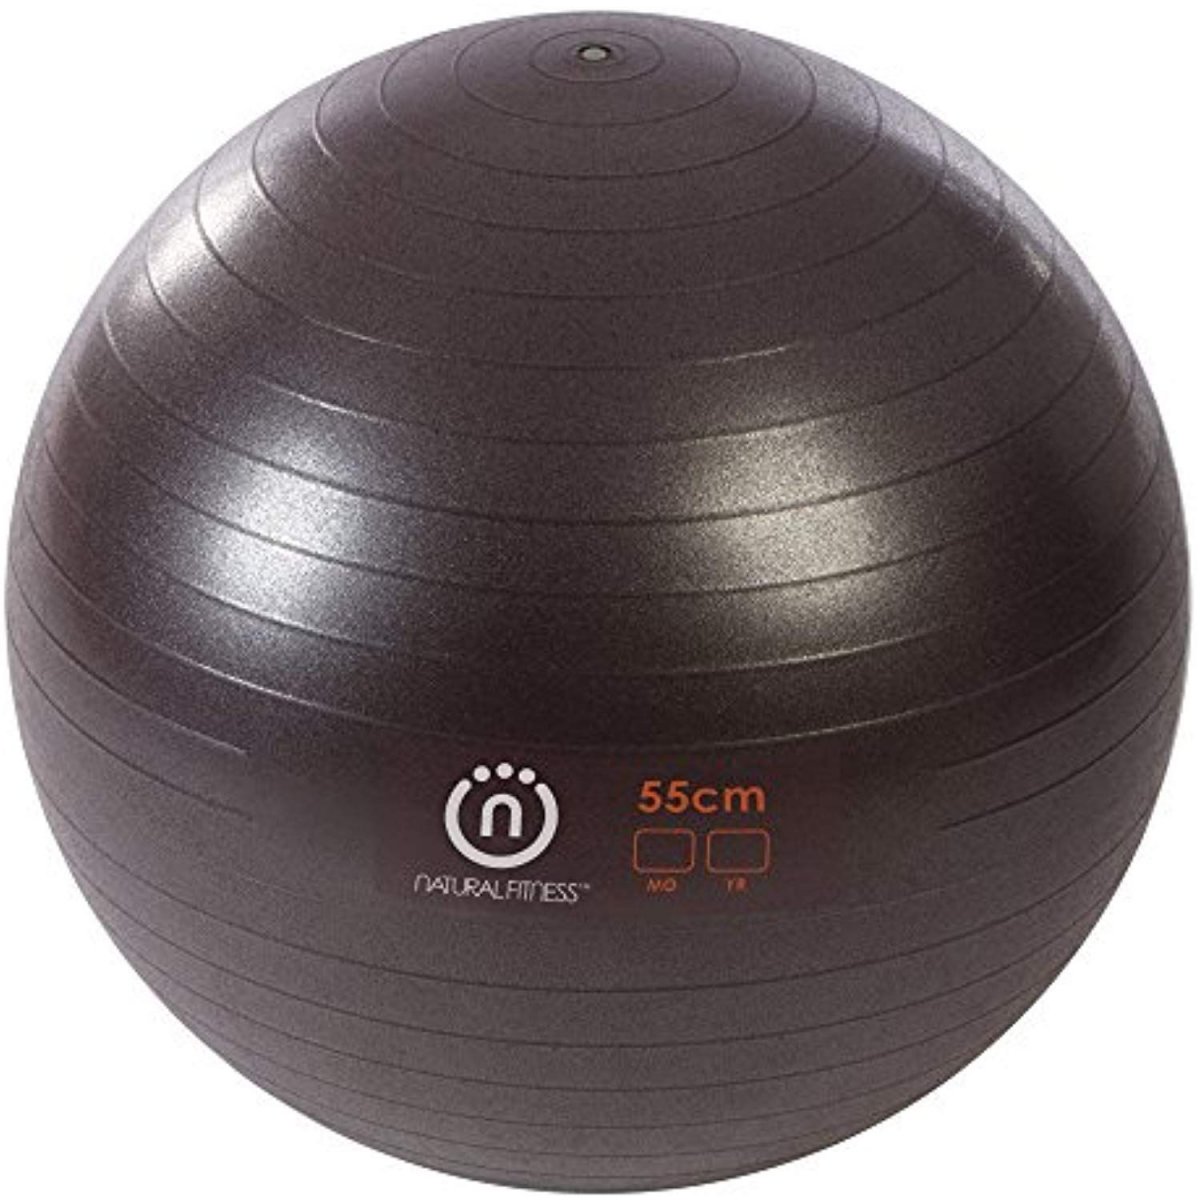 Exercise balls 55